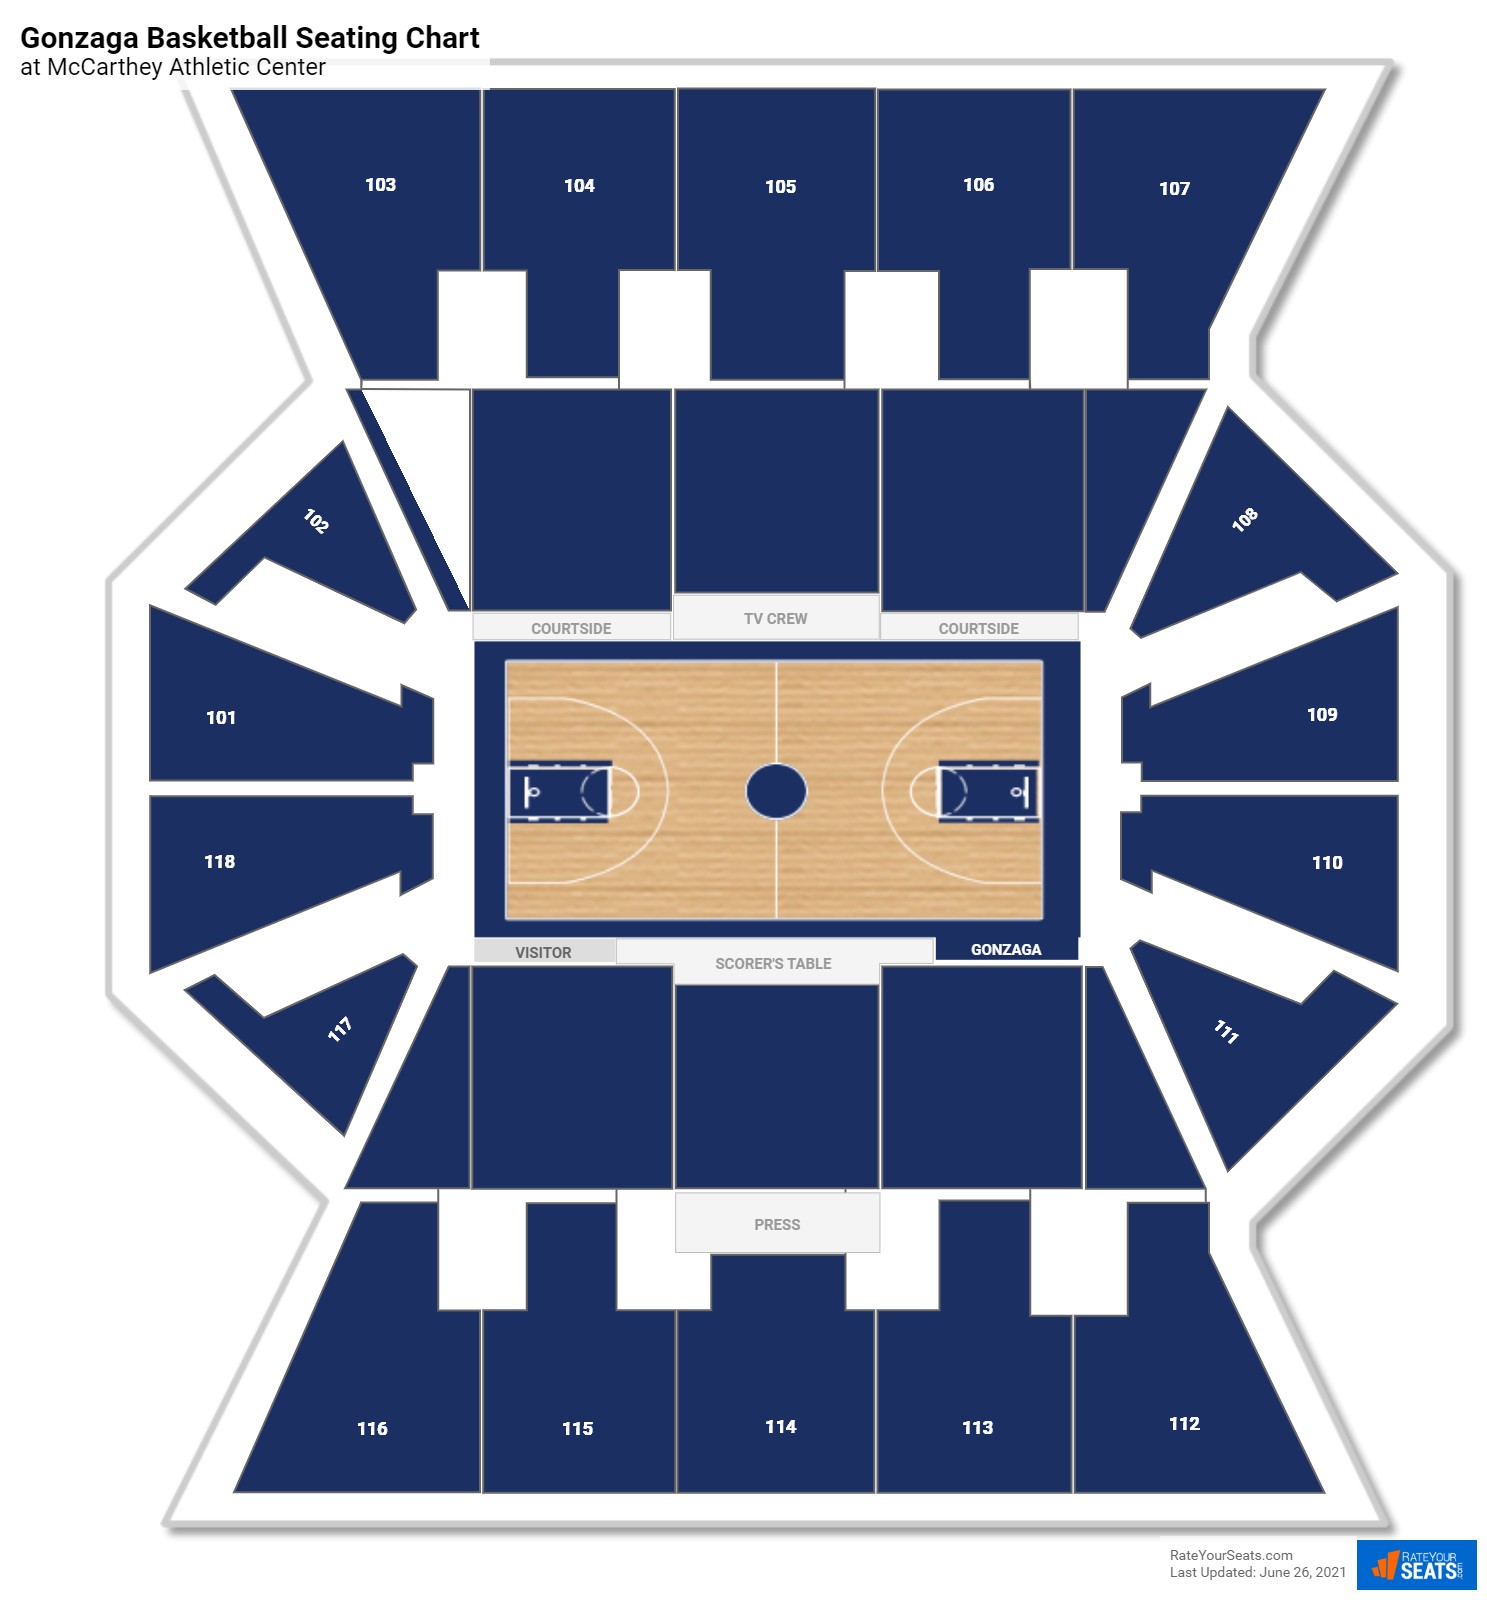 Gonzaga Bulldogs Seating Chart at McCarthey Athletic Center